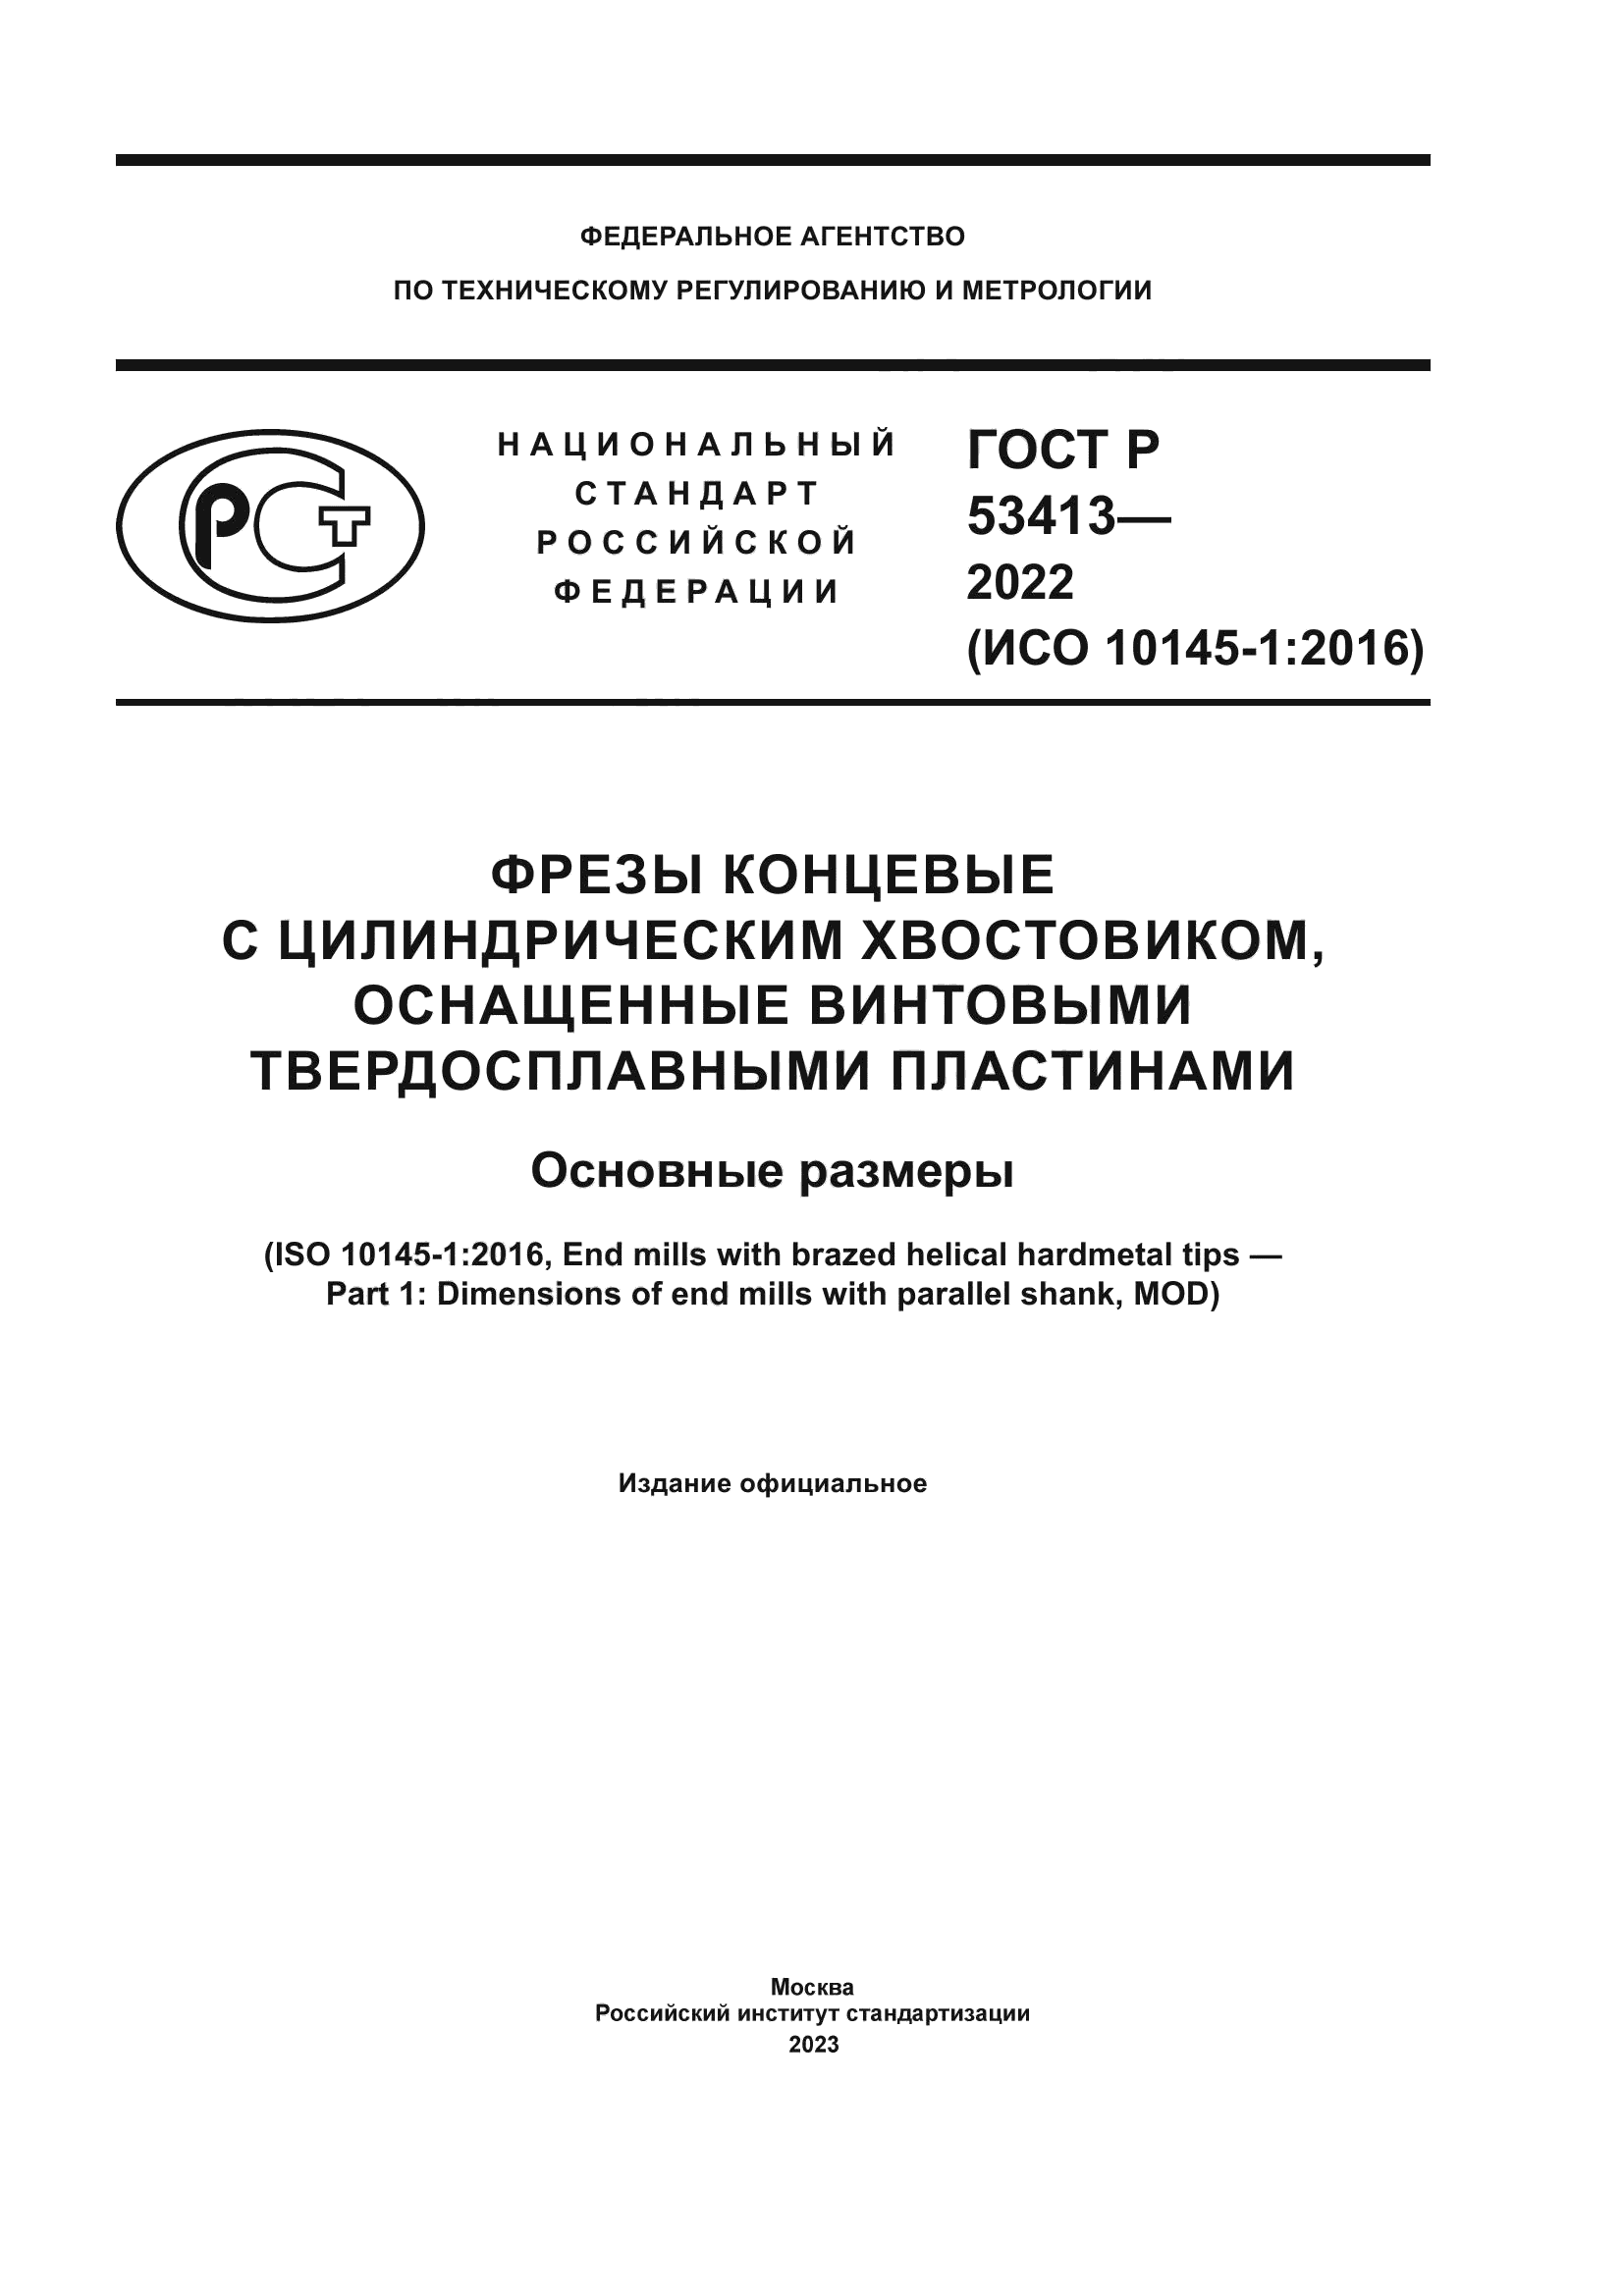 ГОСТ Р 53413-2022